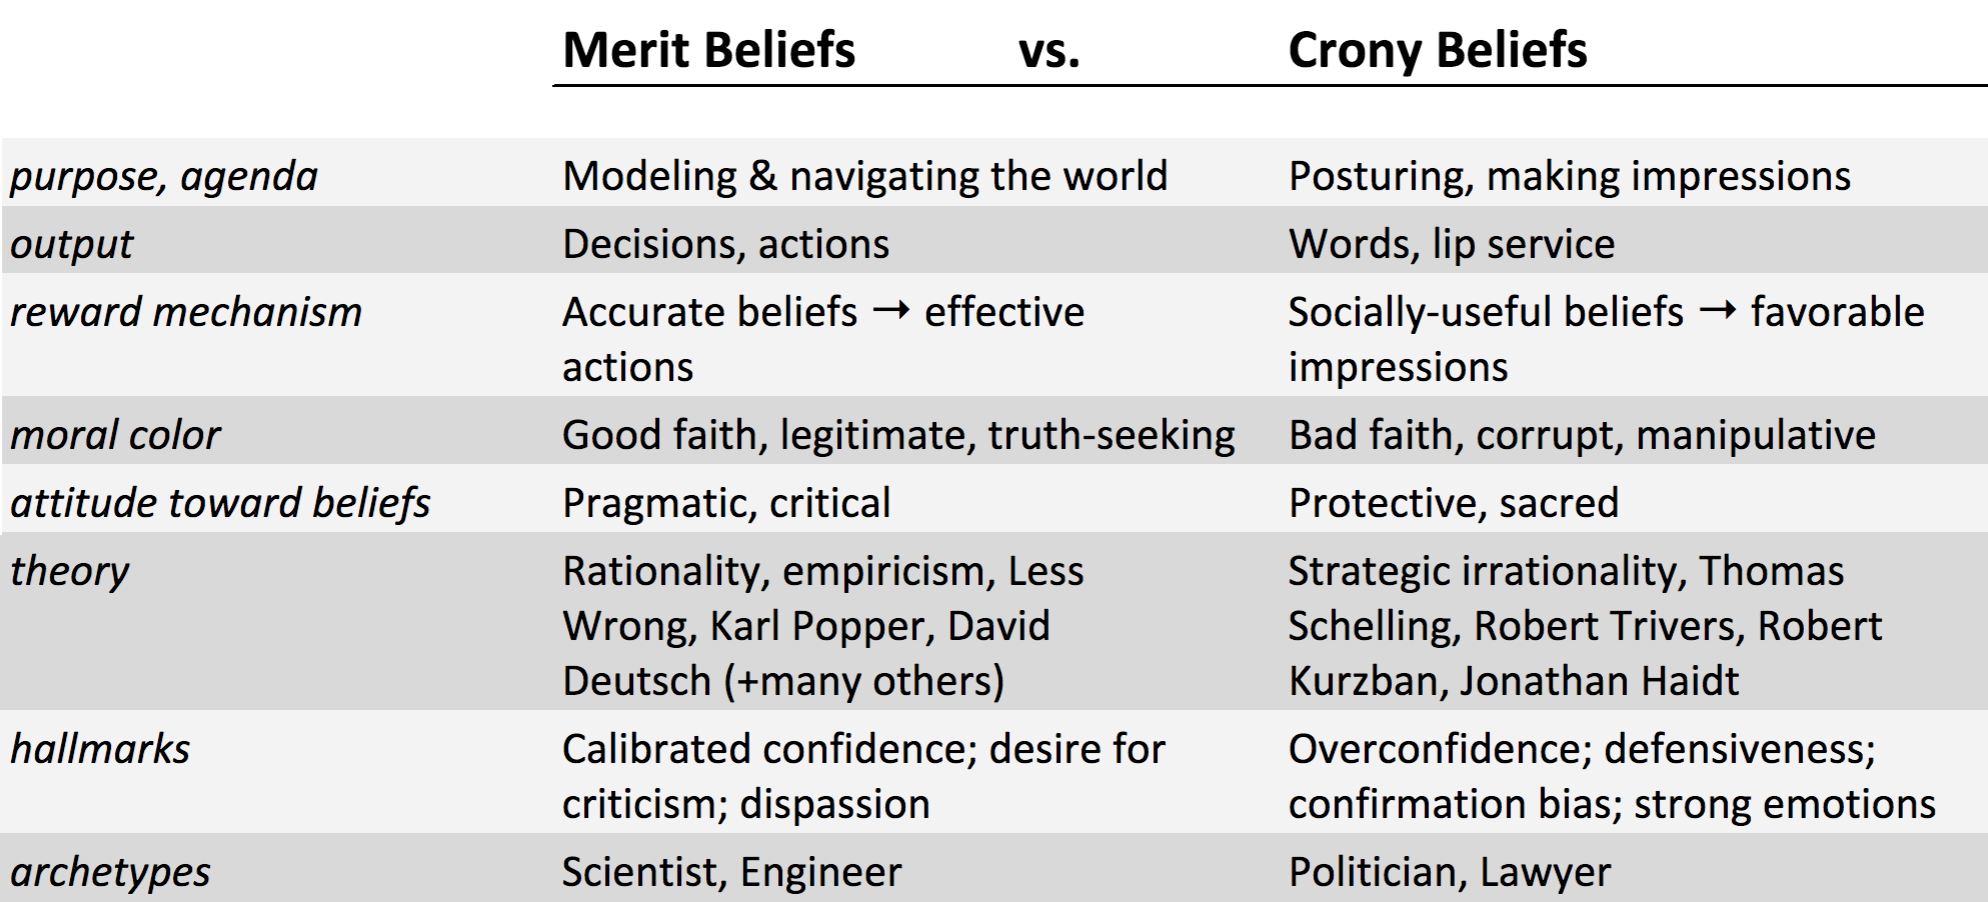 merit_vs_crony_beliefs